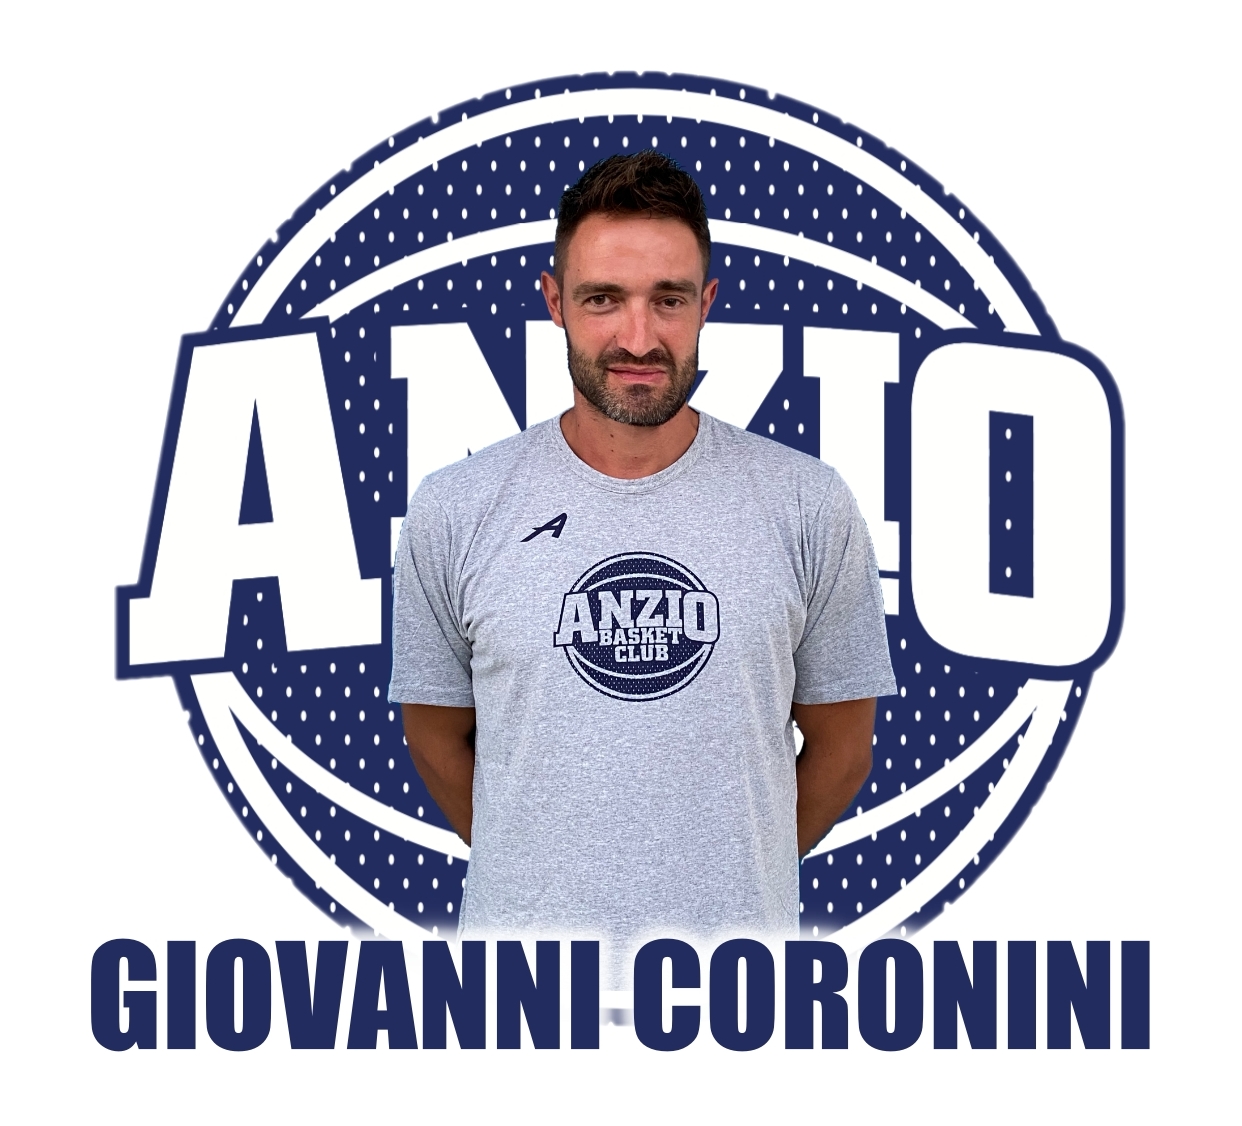 Giovanni Coronini